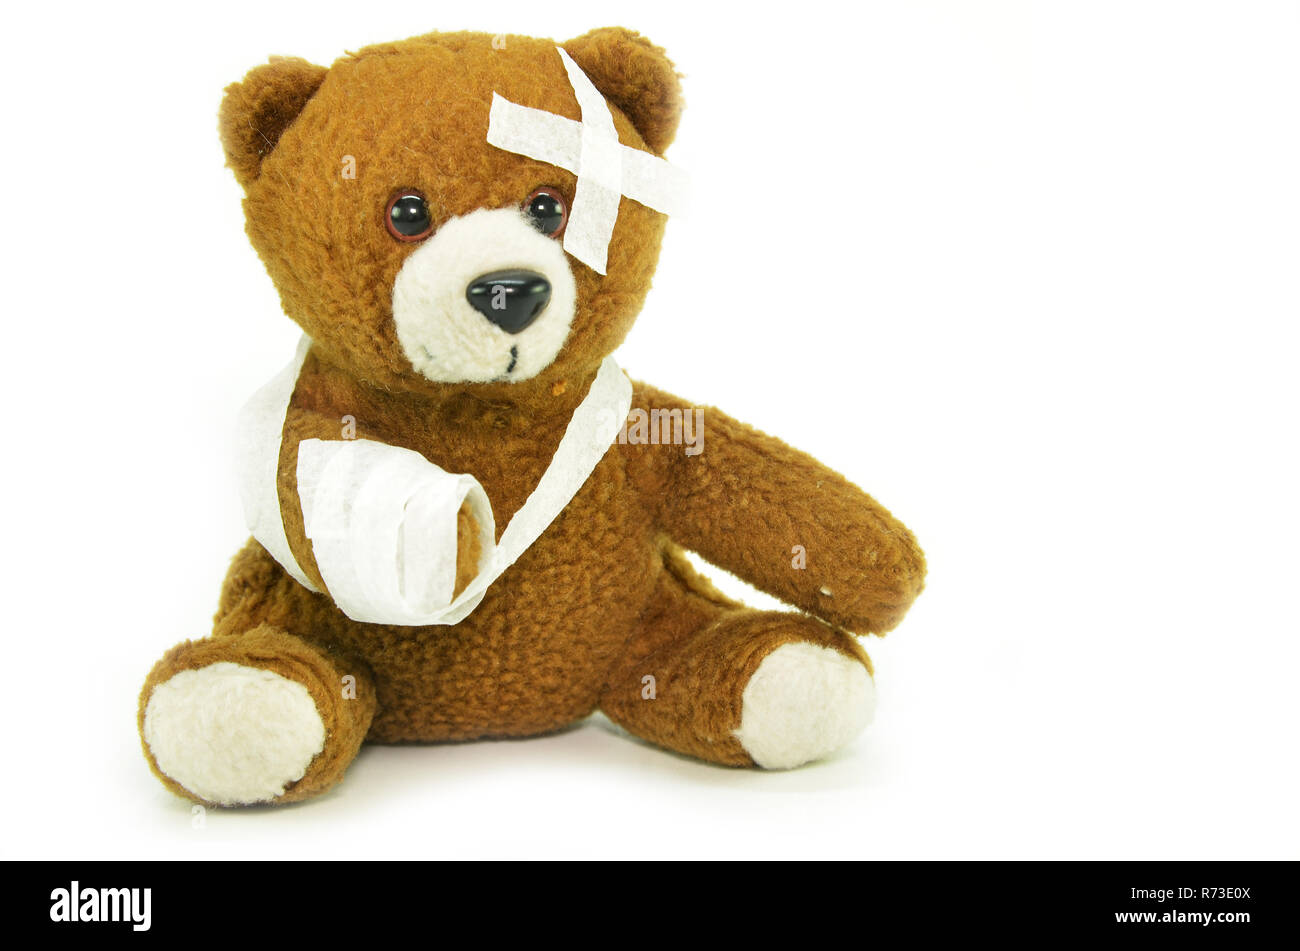 Injured teddy bear with bandages Stock Photo - Alamy